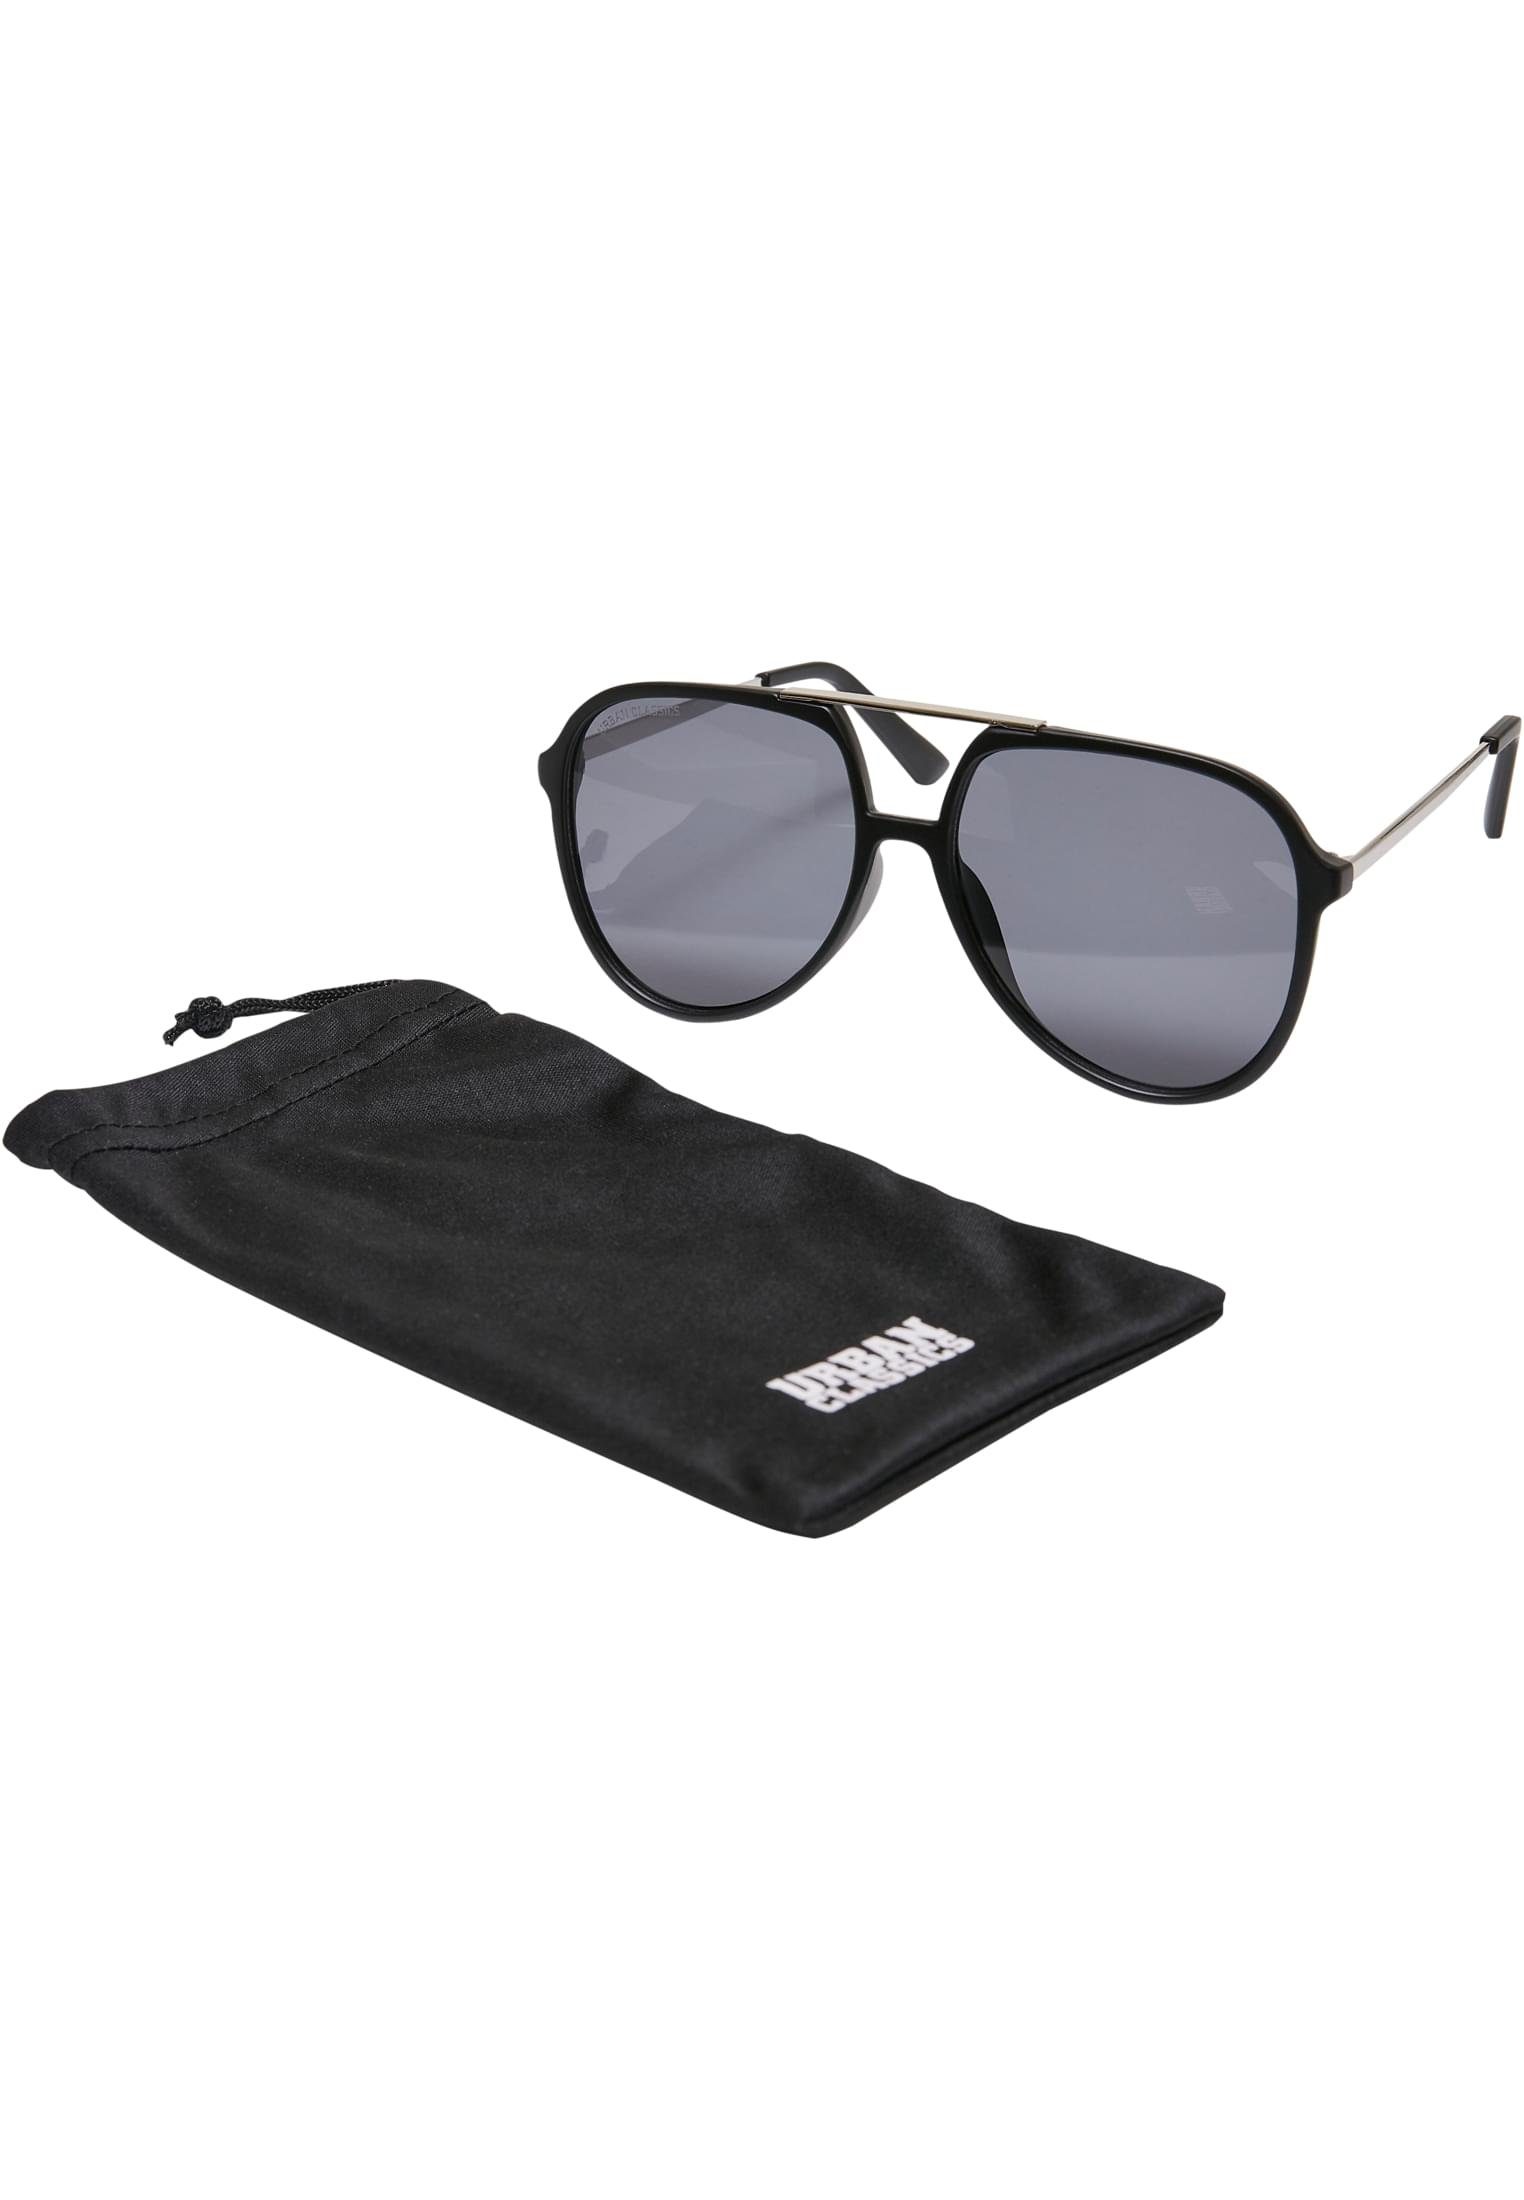 URBAN CLASSICS Sonnenbrille Unisex Sunglasses Osaka black/silver